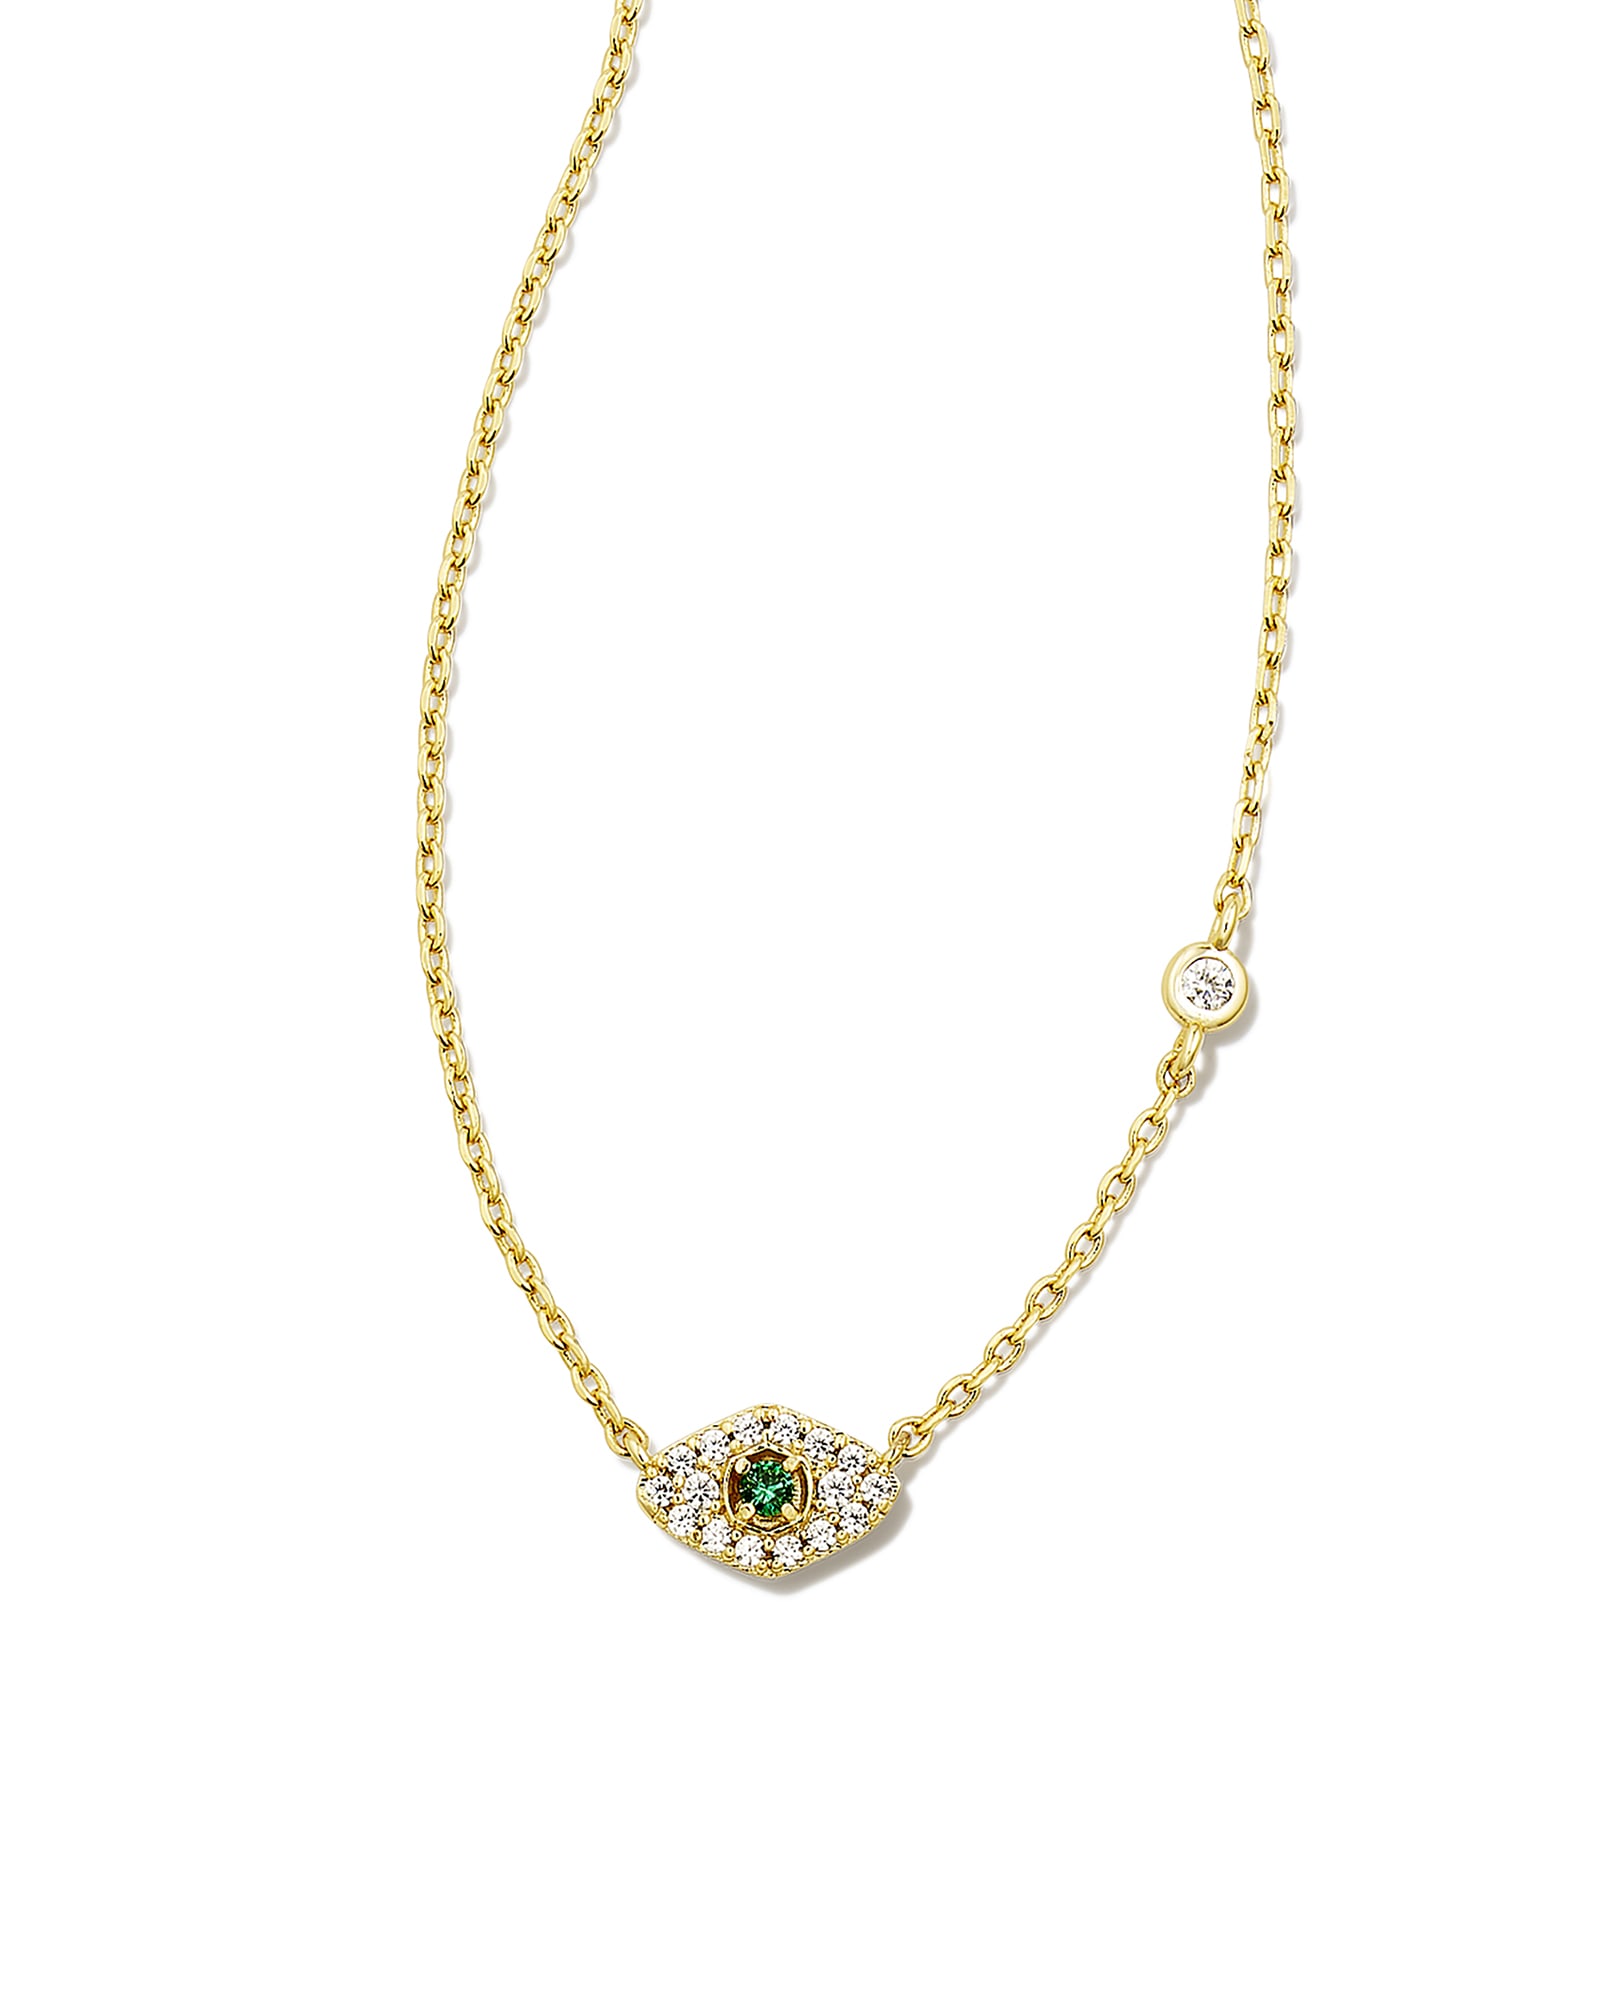 Ashrafa Gold Eye Short Pendant Necklace in Green Crystal Mix | Kendra Scott